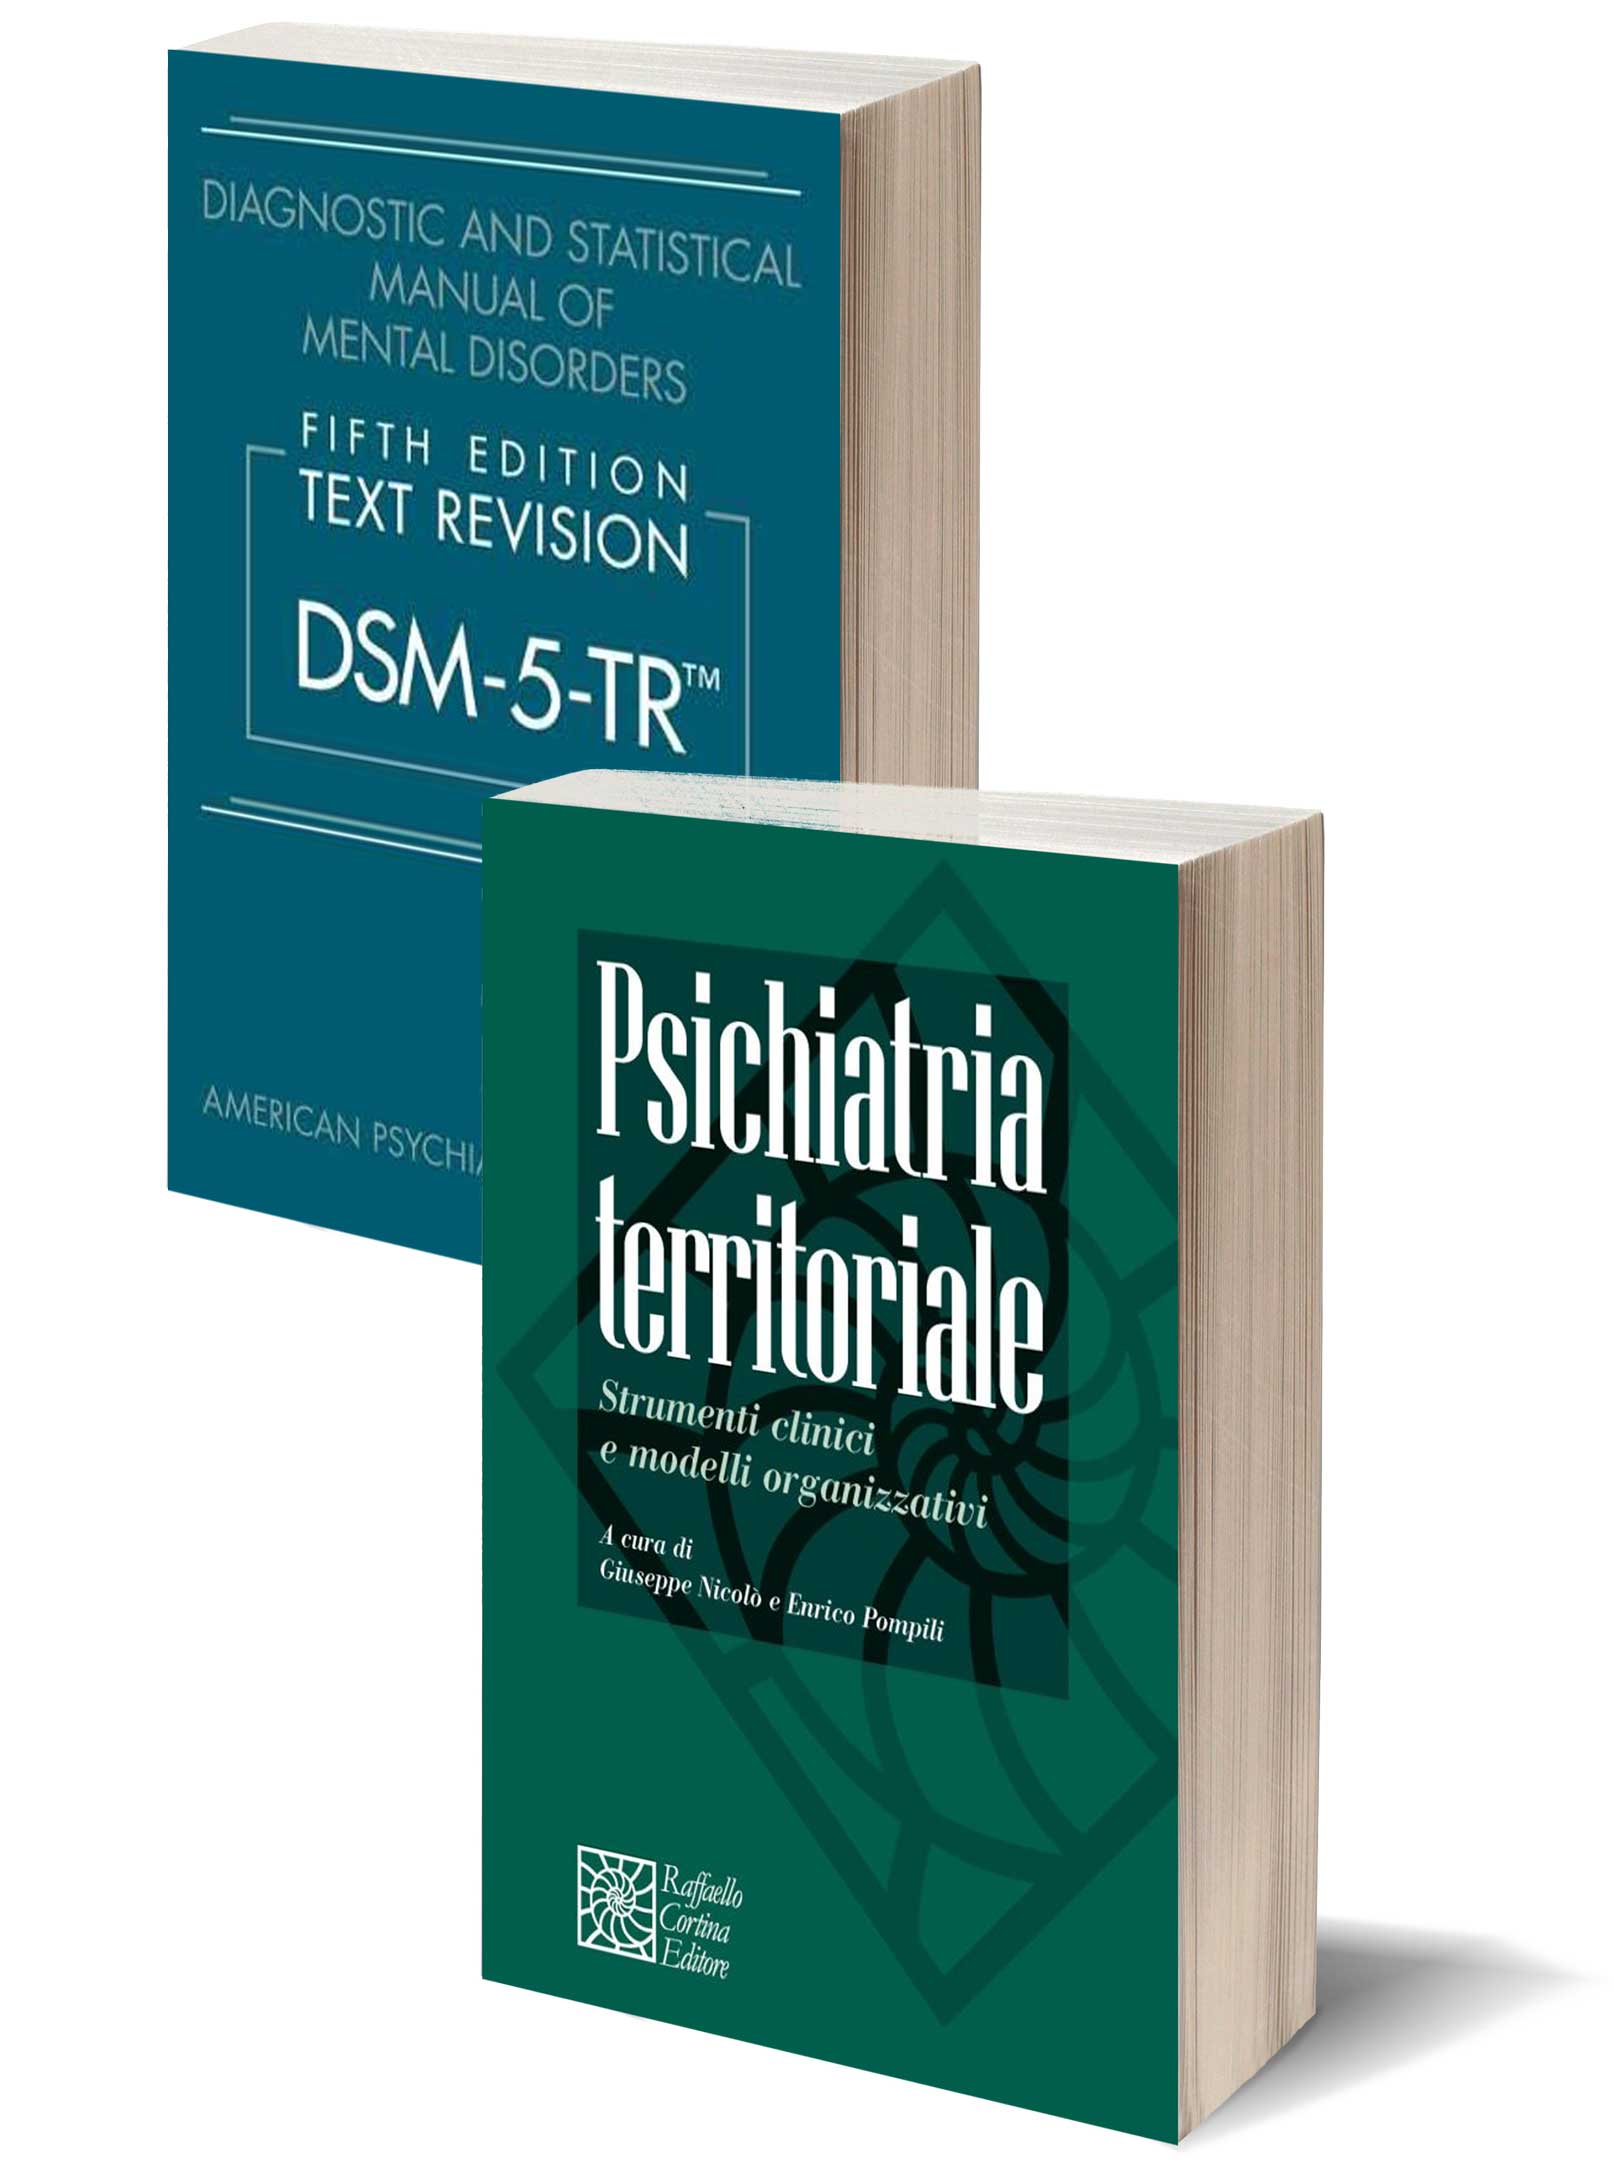 DSM-5-TR Text Revision + Psichiatria territoriale